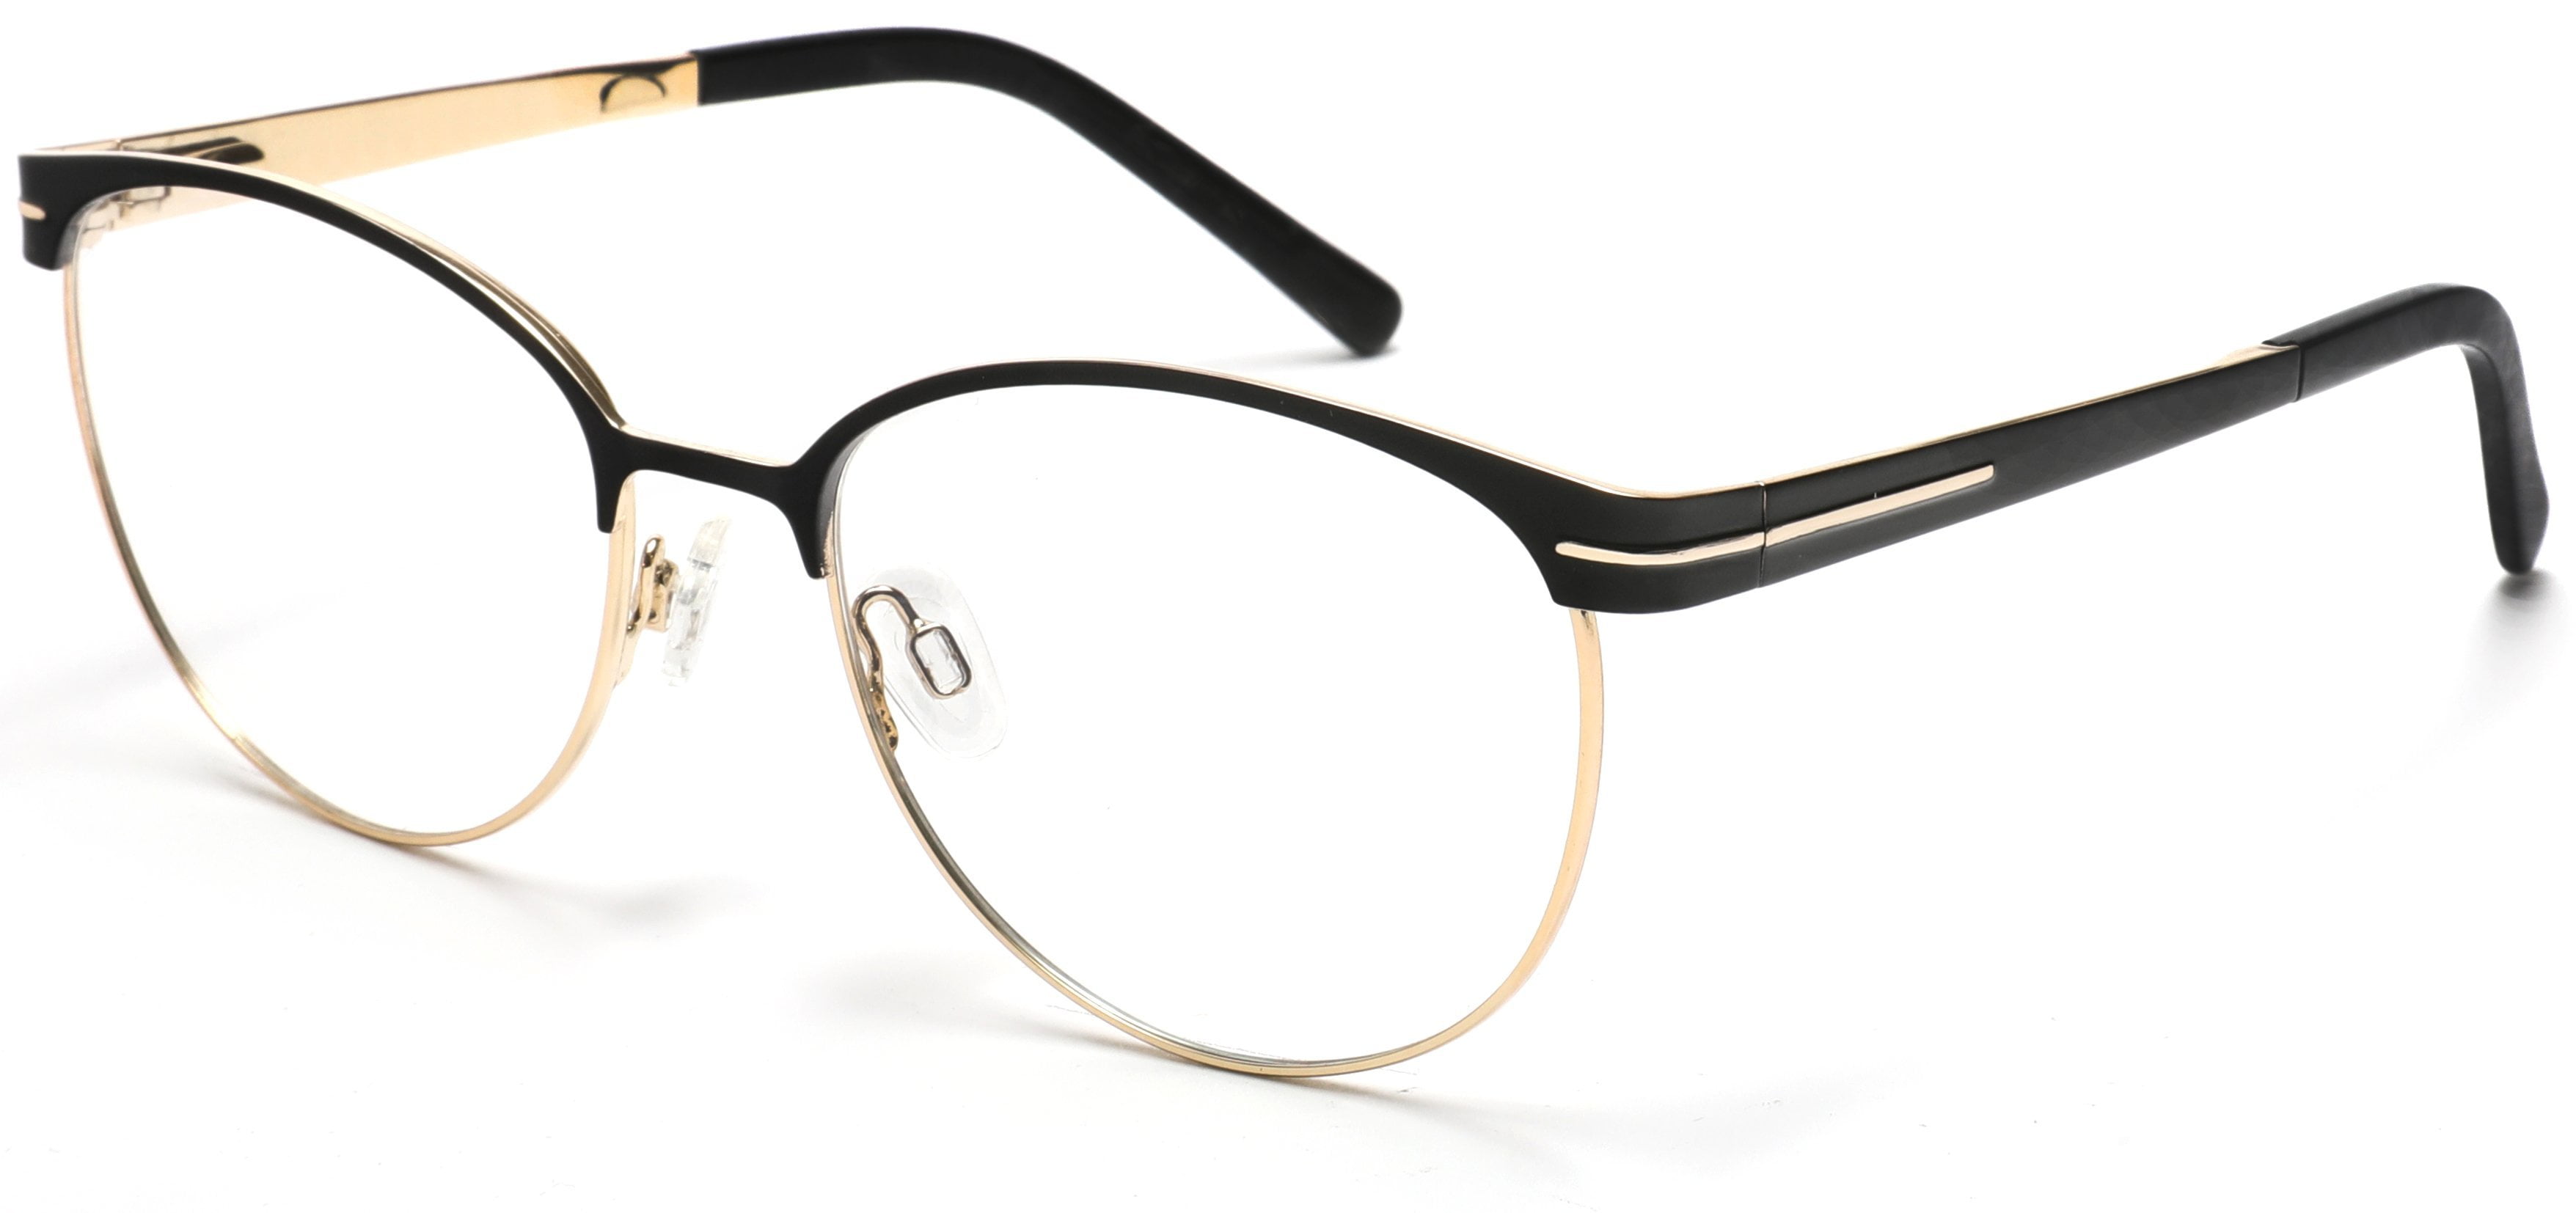 Tango Optics Oval Metal Eyeglasses Frame Luxe Rx Stainless Steel Elisabeth Noelle Neumann Blue